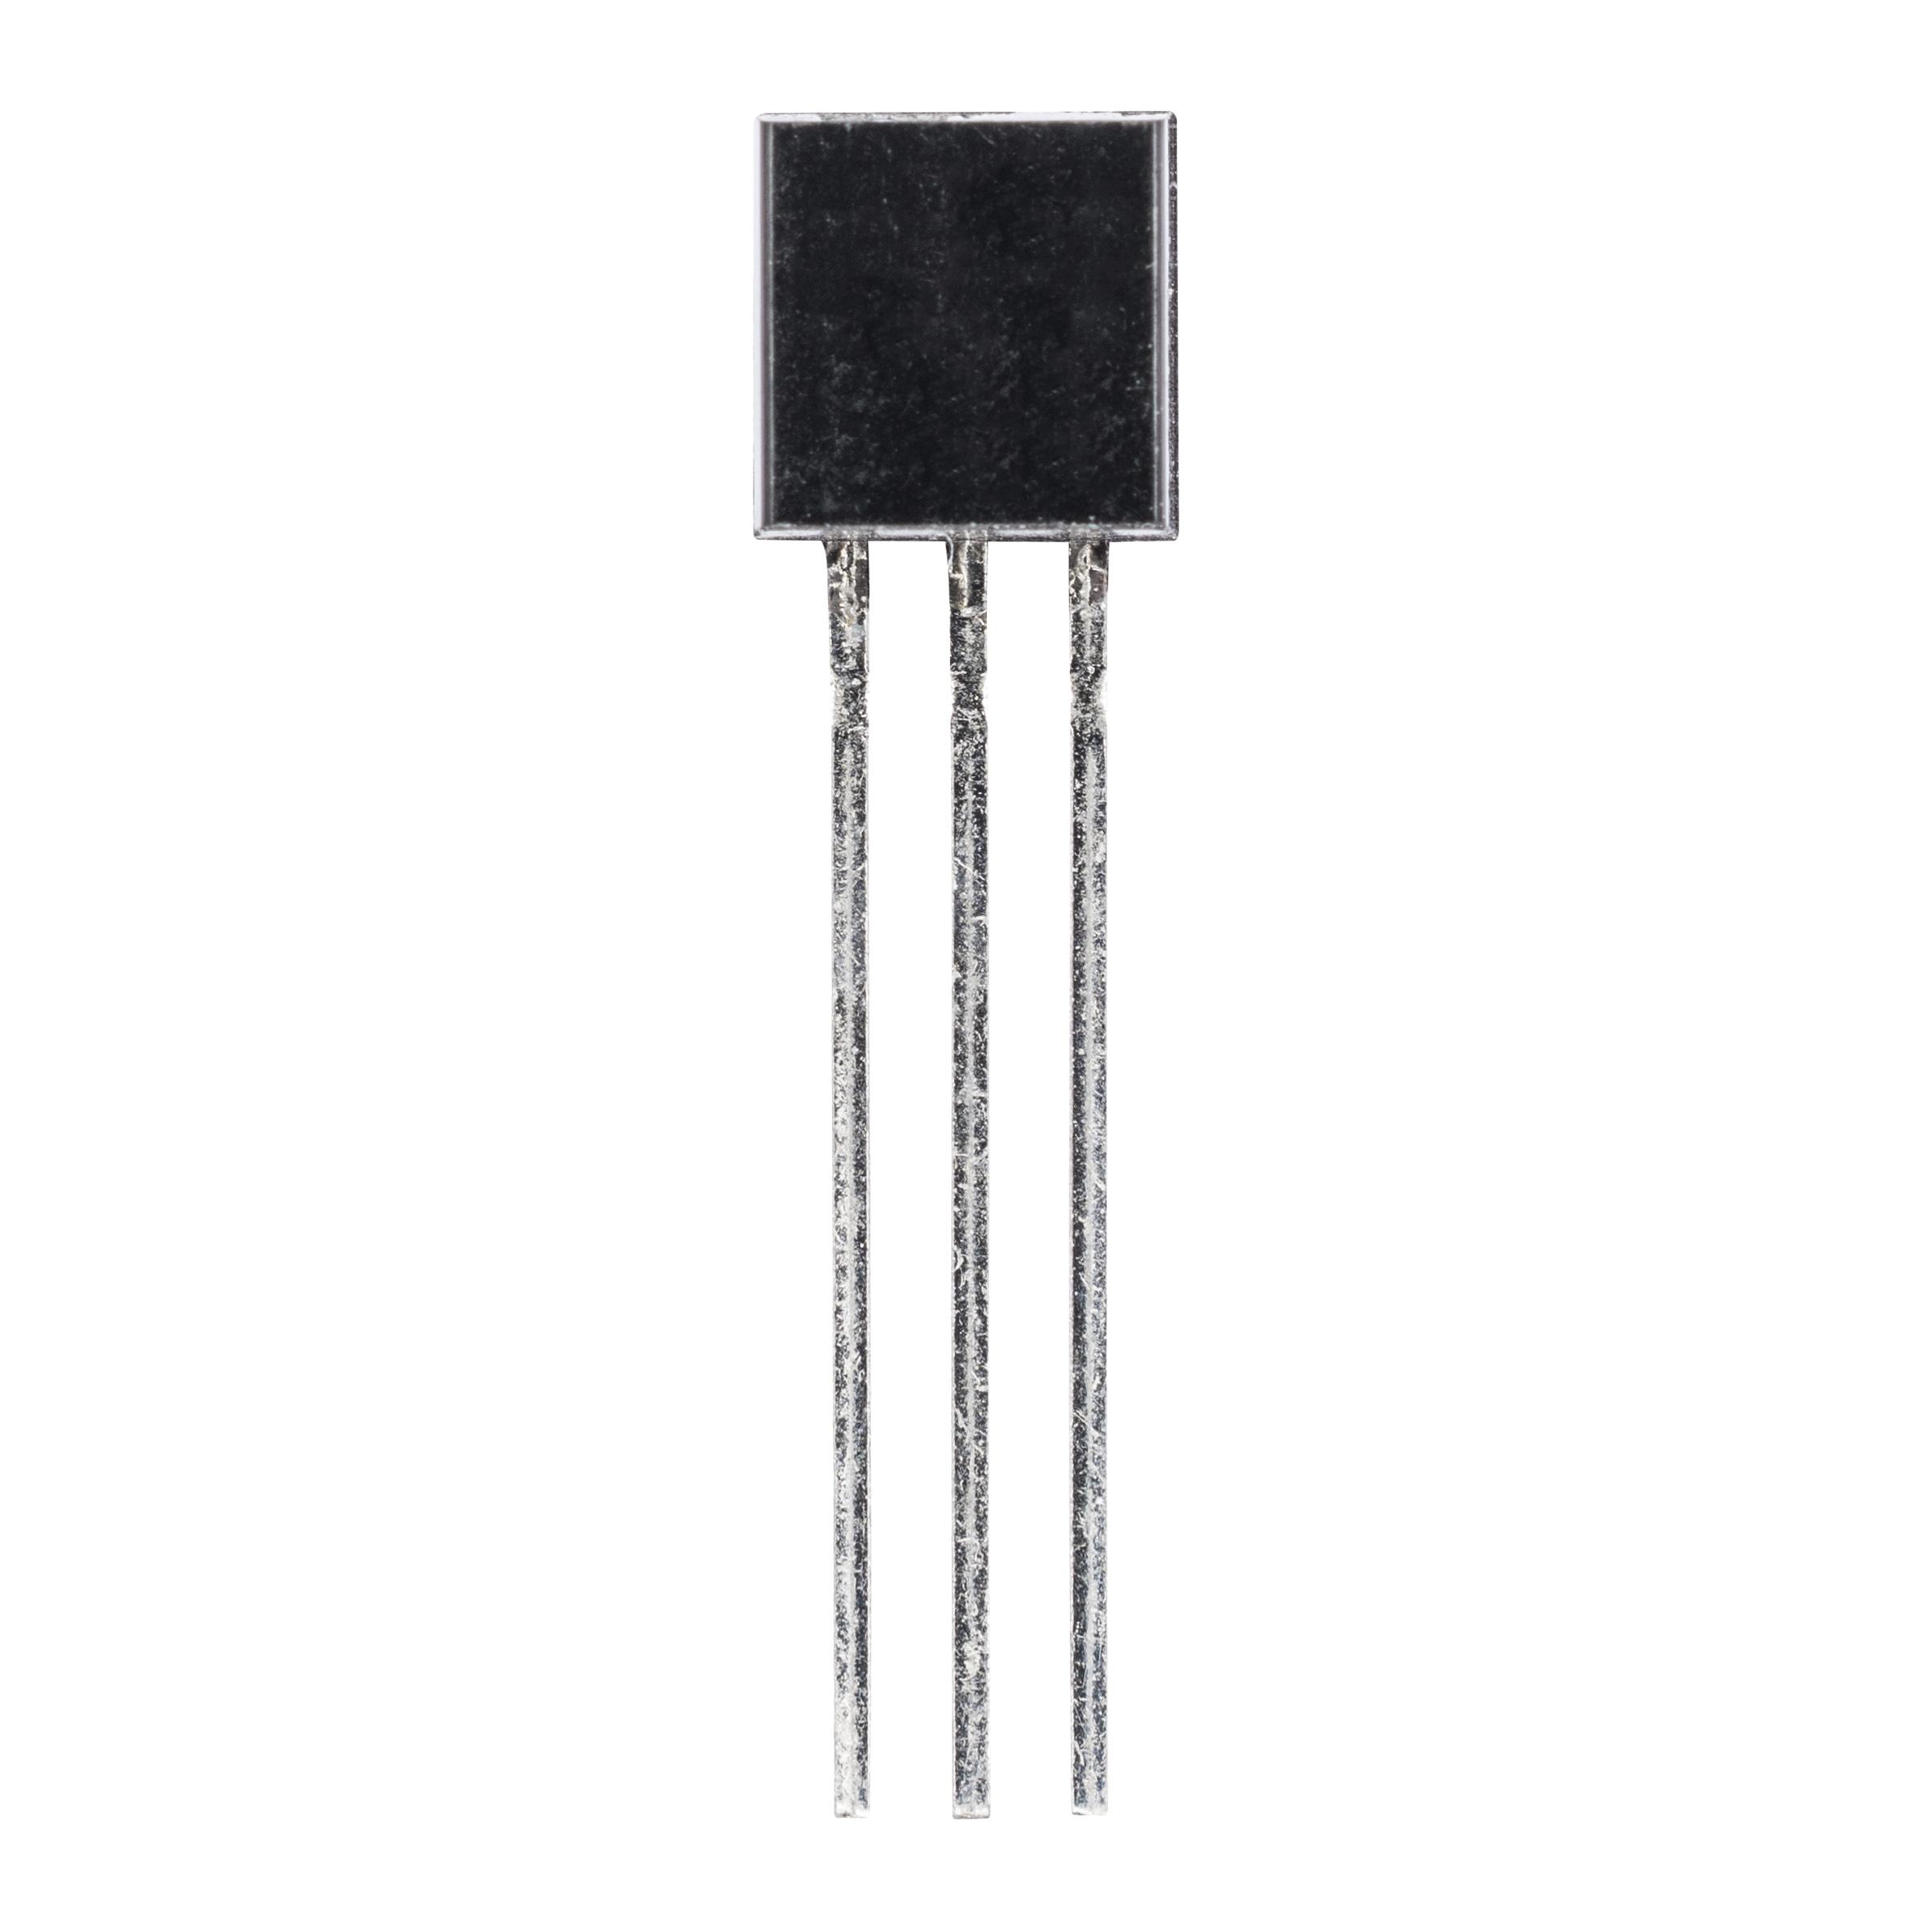 2SC945 (транзистор биполярный NPN)